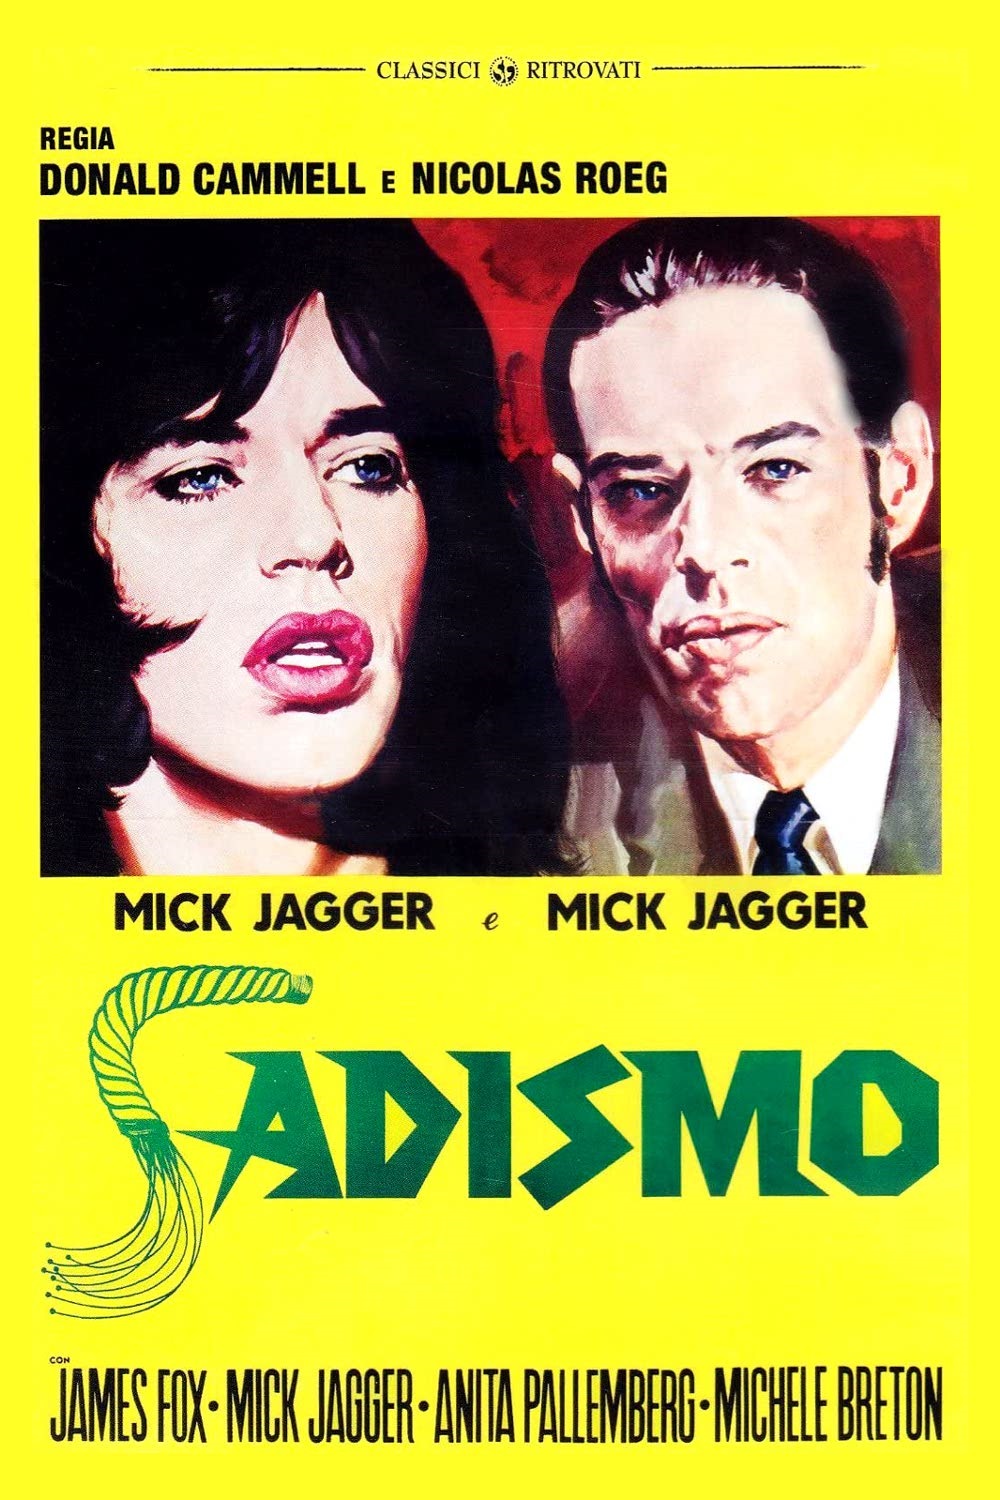 Sadismo [HD] (1970)